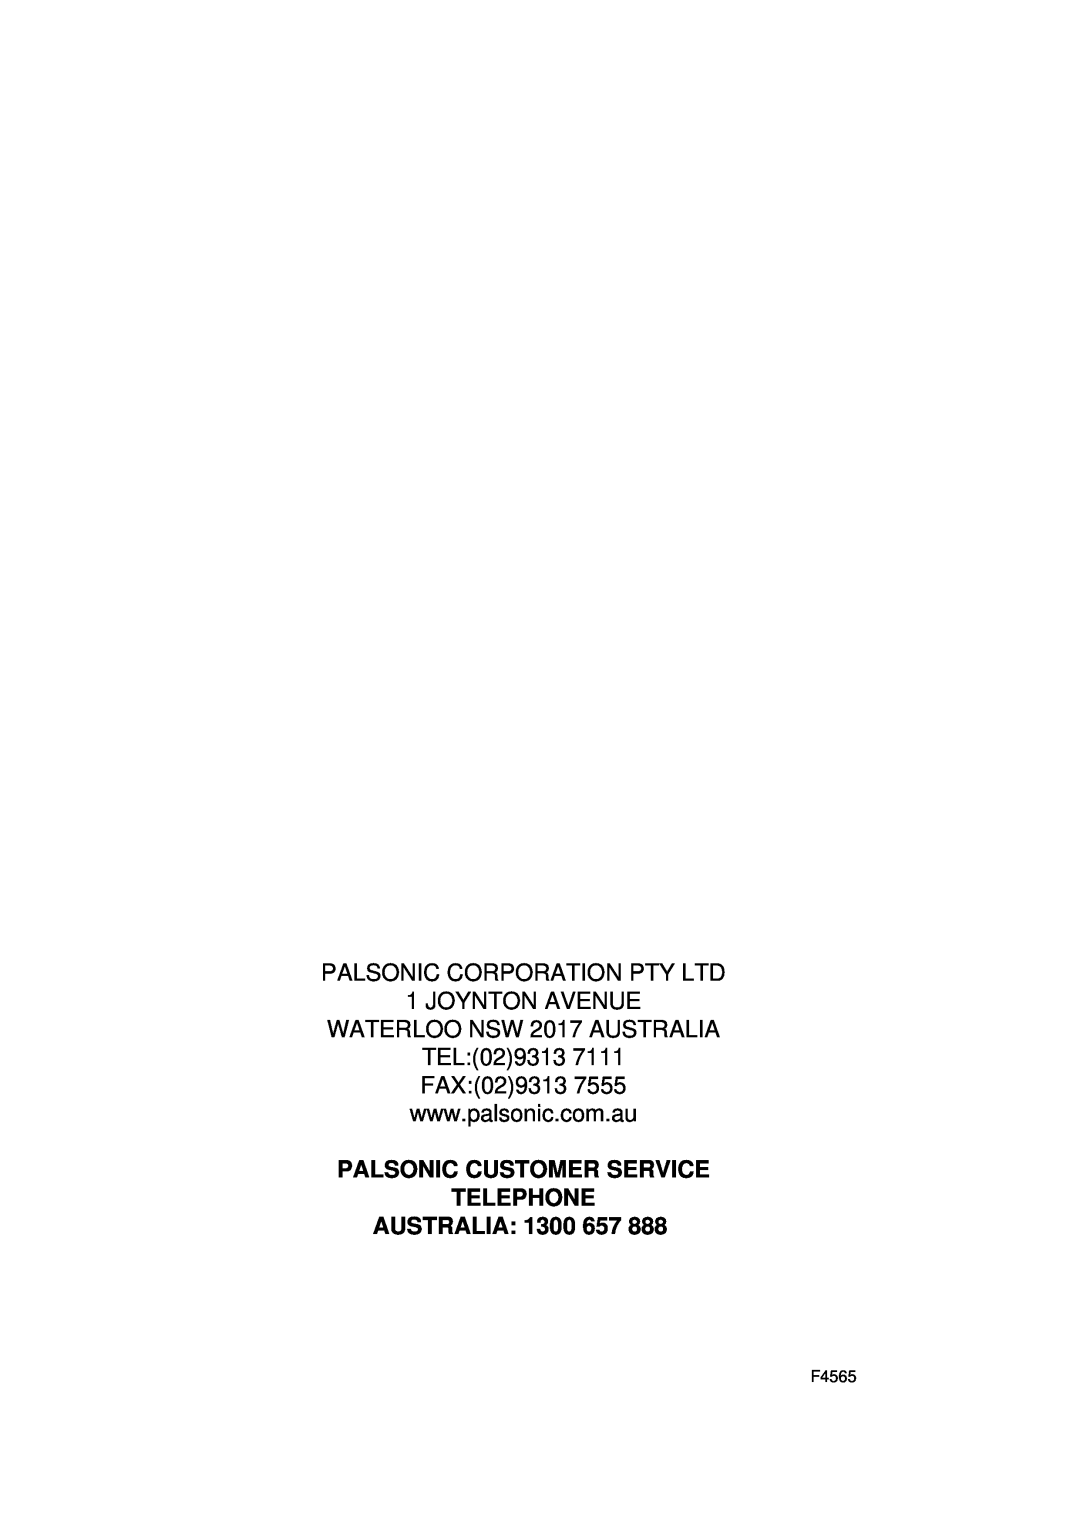 Palsonic PAB-3000 JOYNTON AVENUE WATERLOO NSW 2017 AUSTRALIA TEL029313, Palsonic Customer Service Telephone Australia 